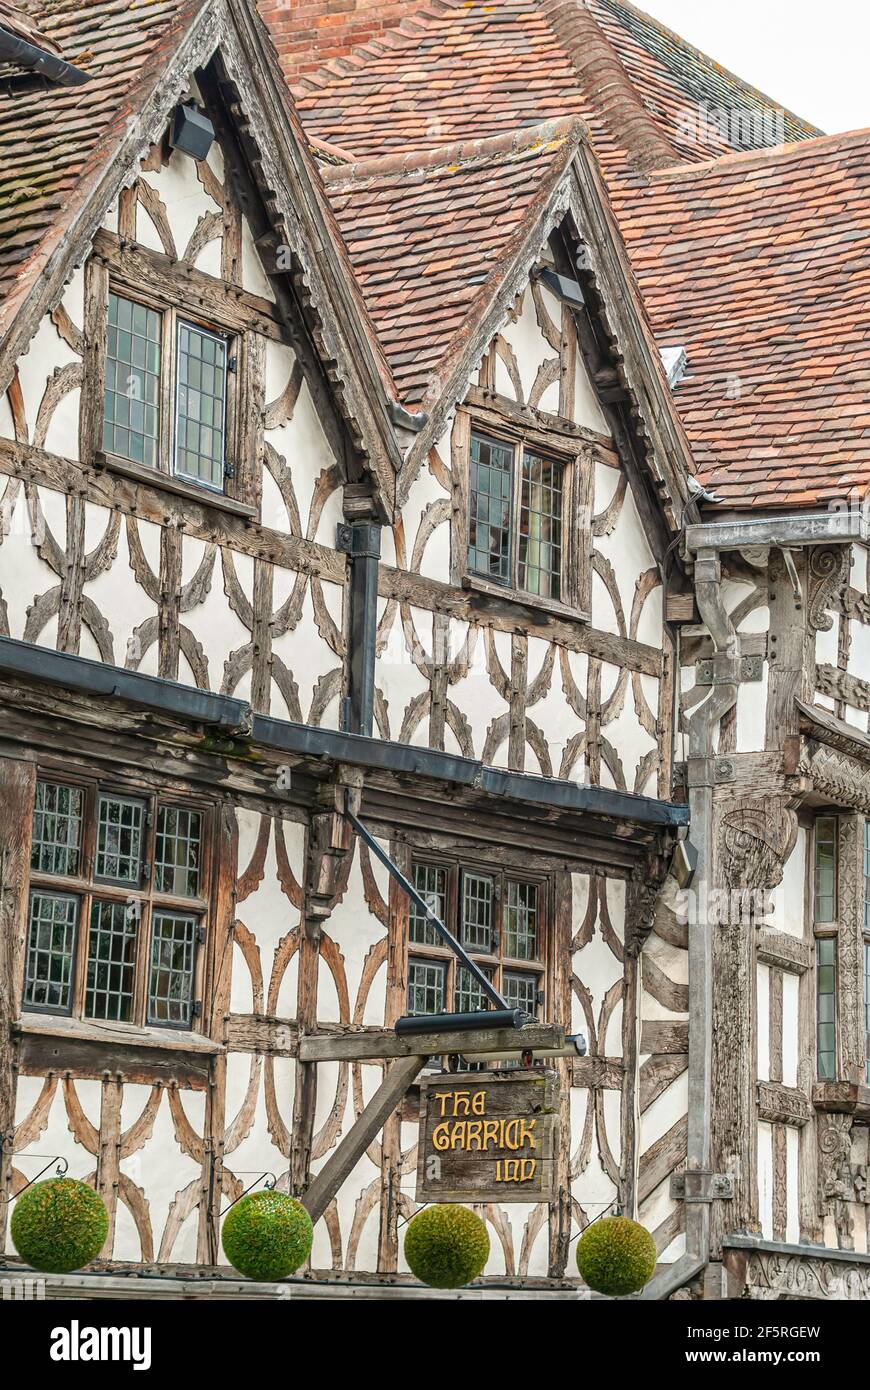 Façade de l'ancien Garrick Inn Pub à Stratford-upon-Avon, Warwickshire, Angleterre, Royaume-Uni Banque D'Images